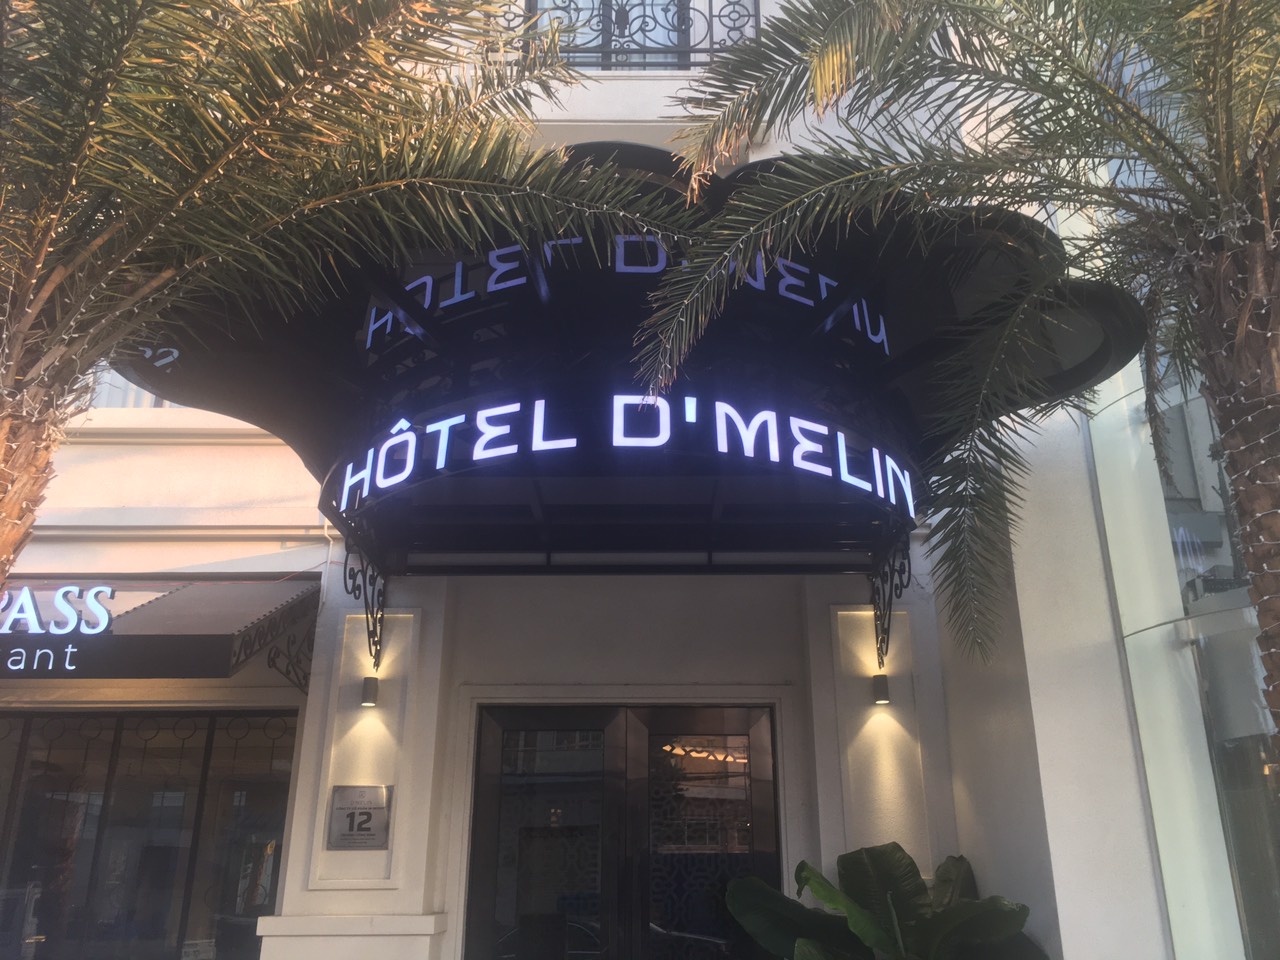 Hotel Dmelin